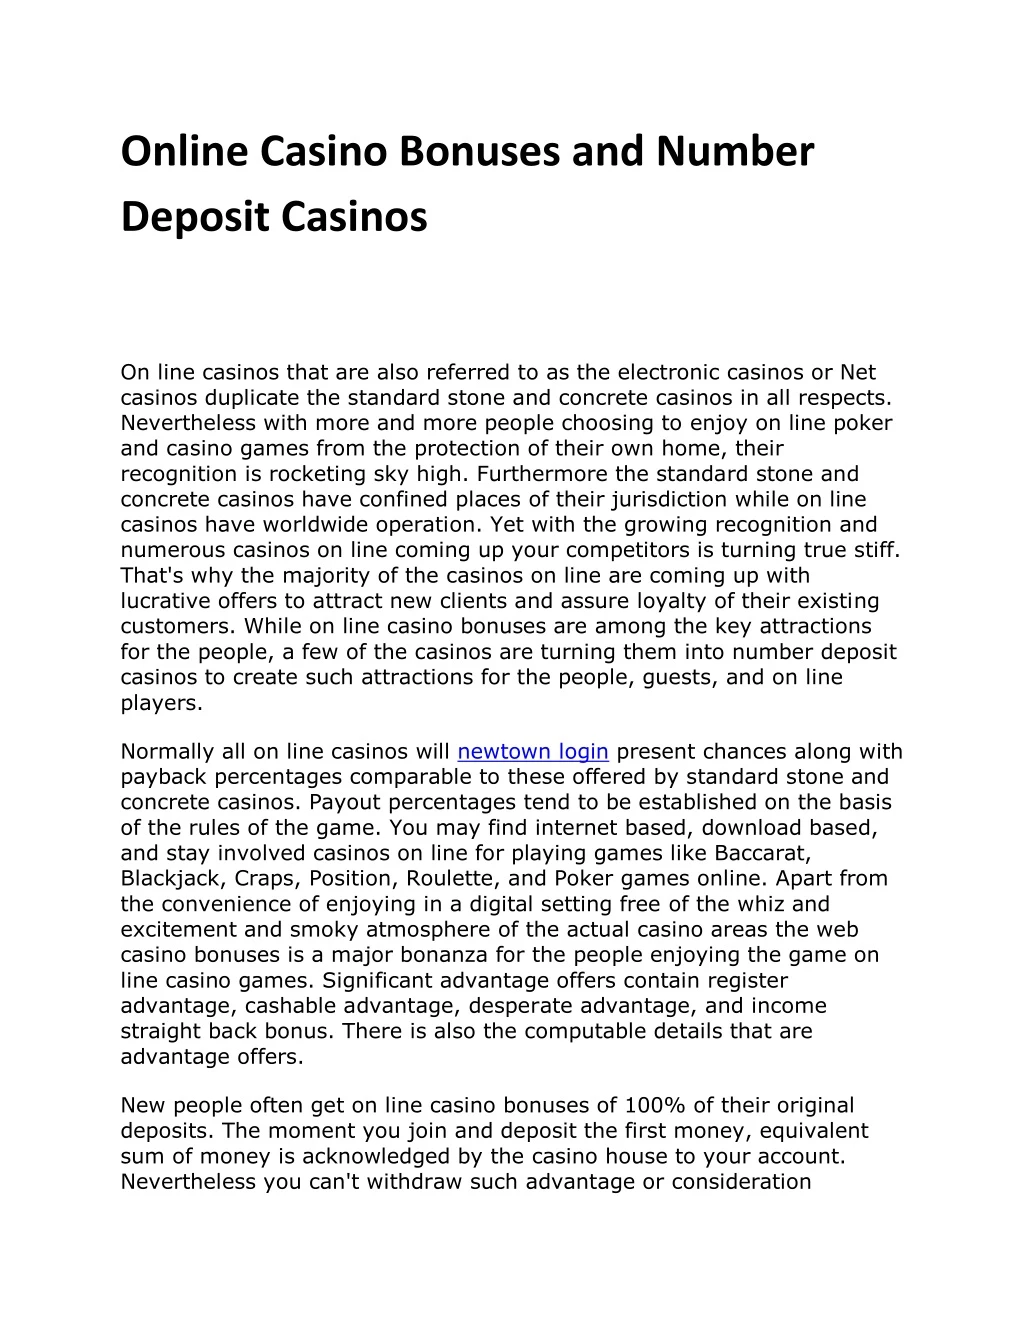 online casino bonuses and number deposit casinos